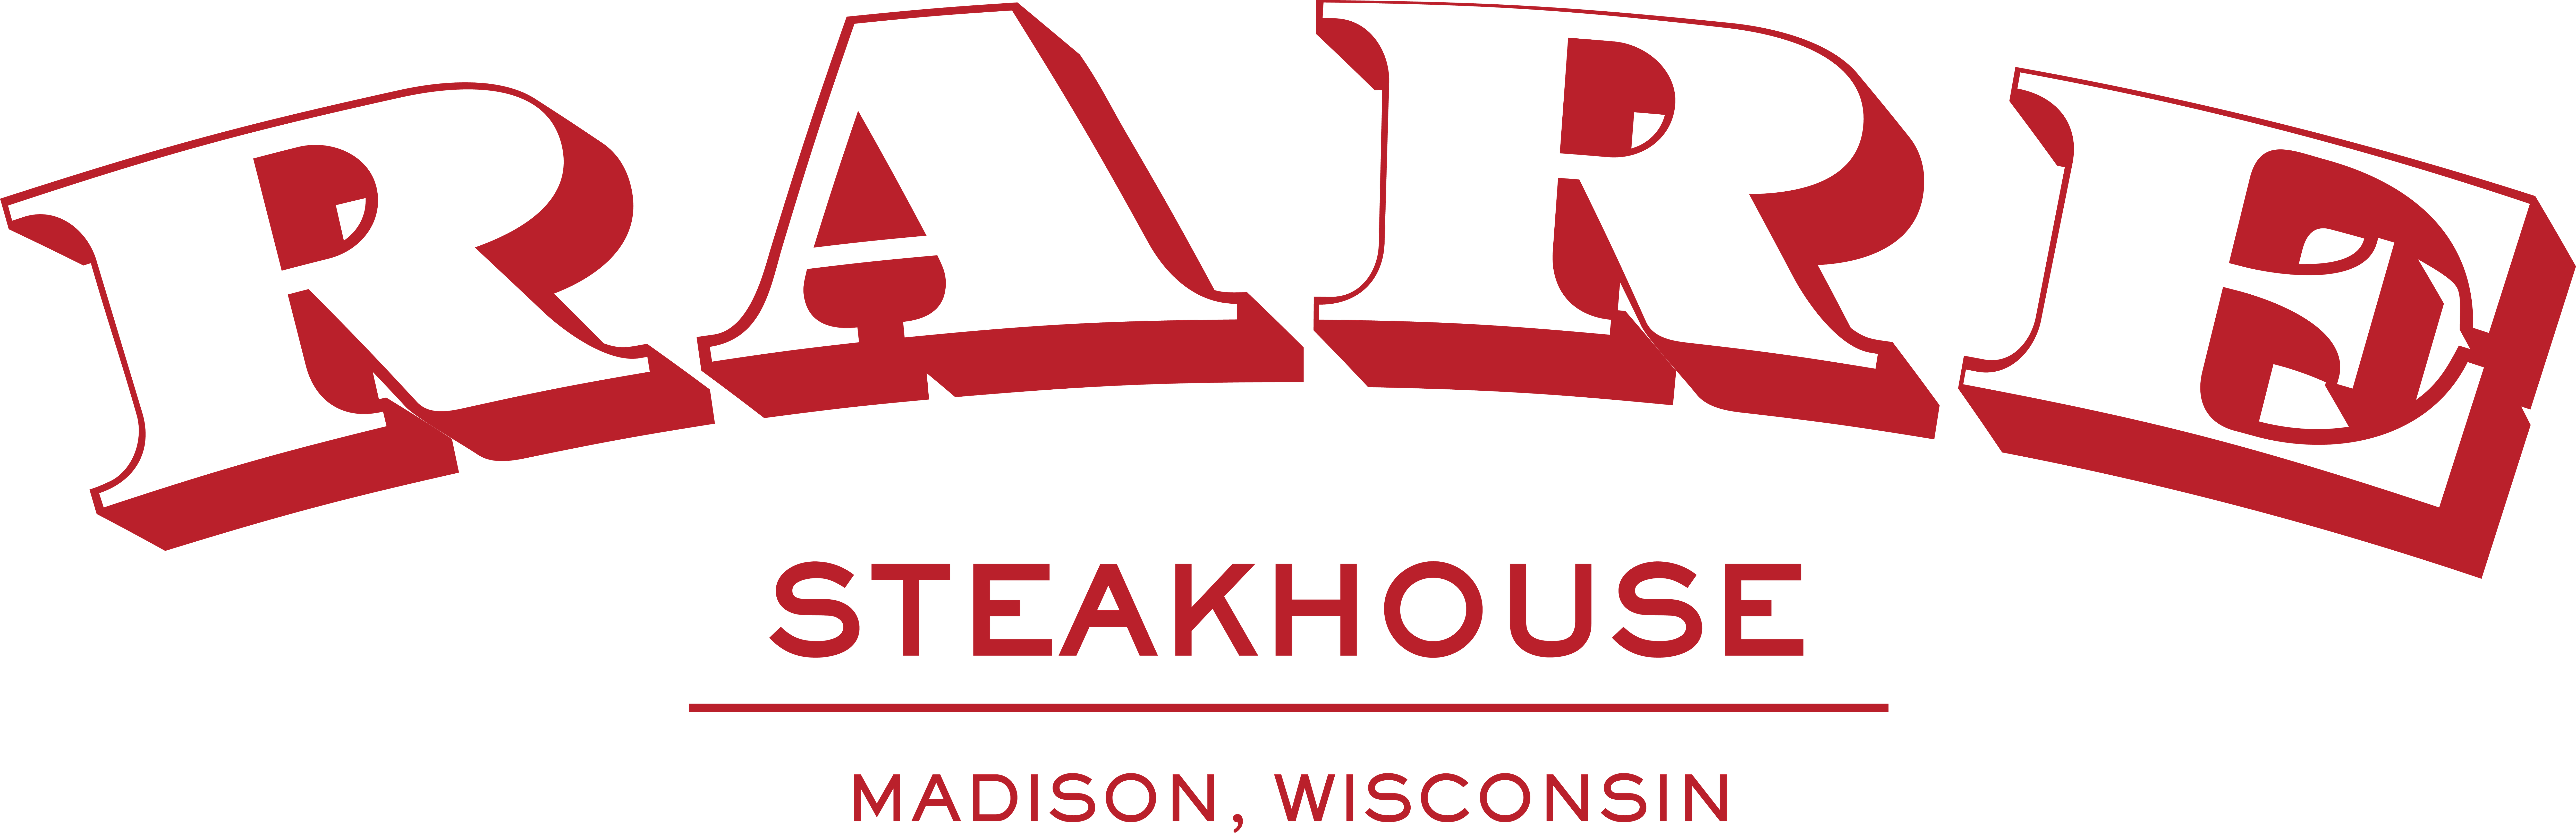 RARE Steakhouse